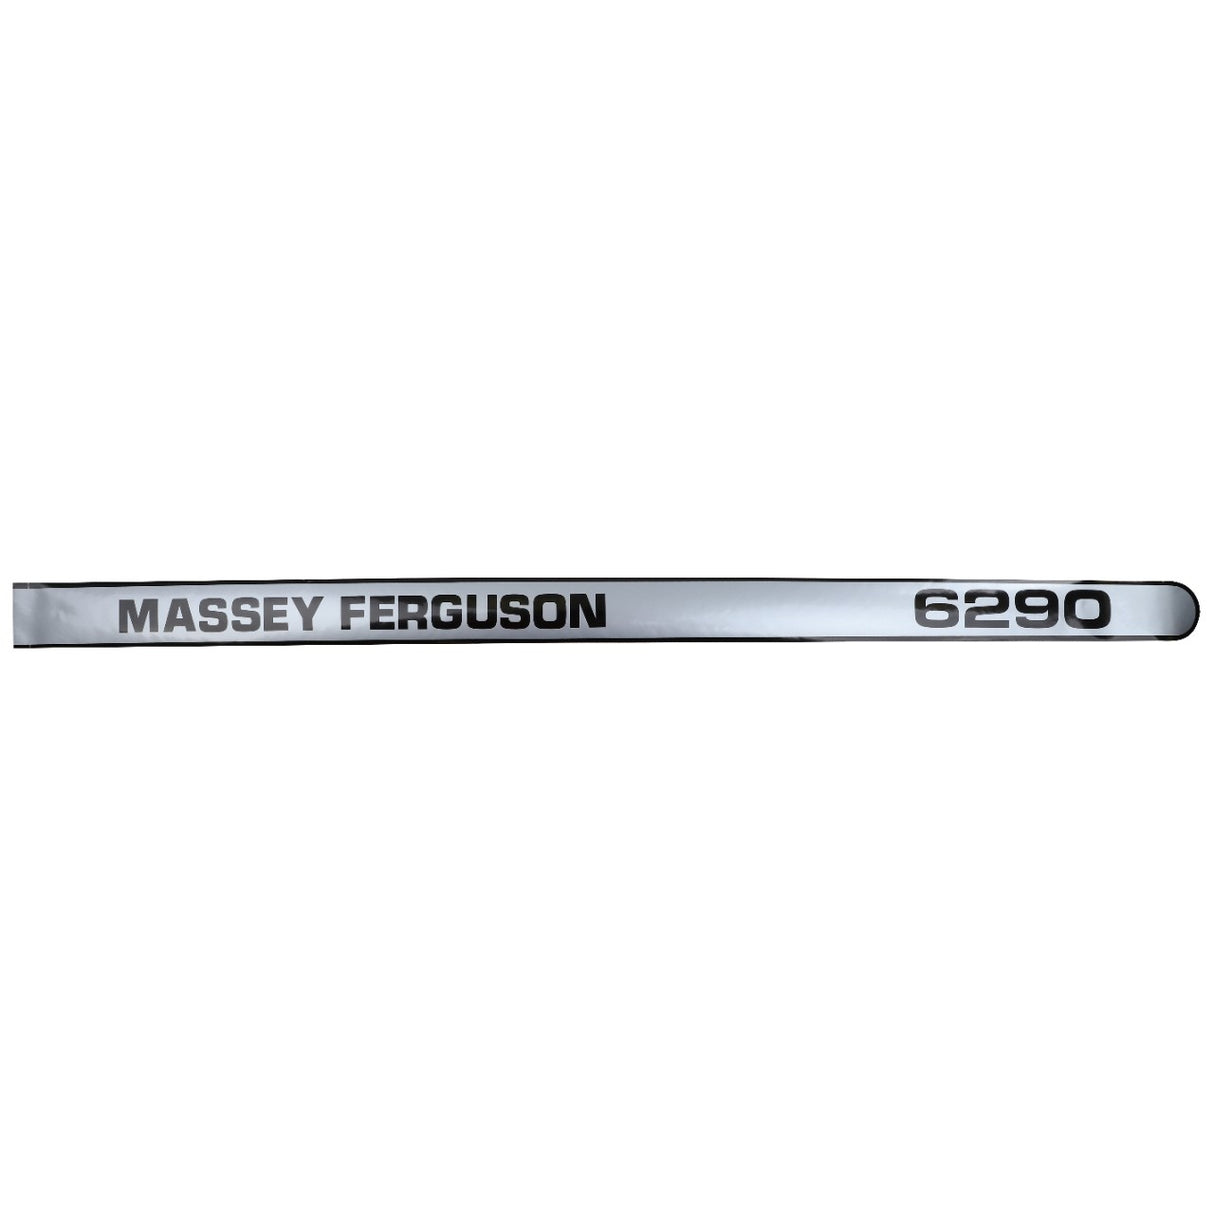 AGCO | Decal, Massey Ferguson 6290, Right - 3781433M1 - Farming Parts